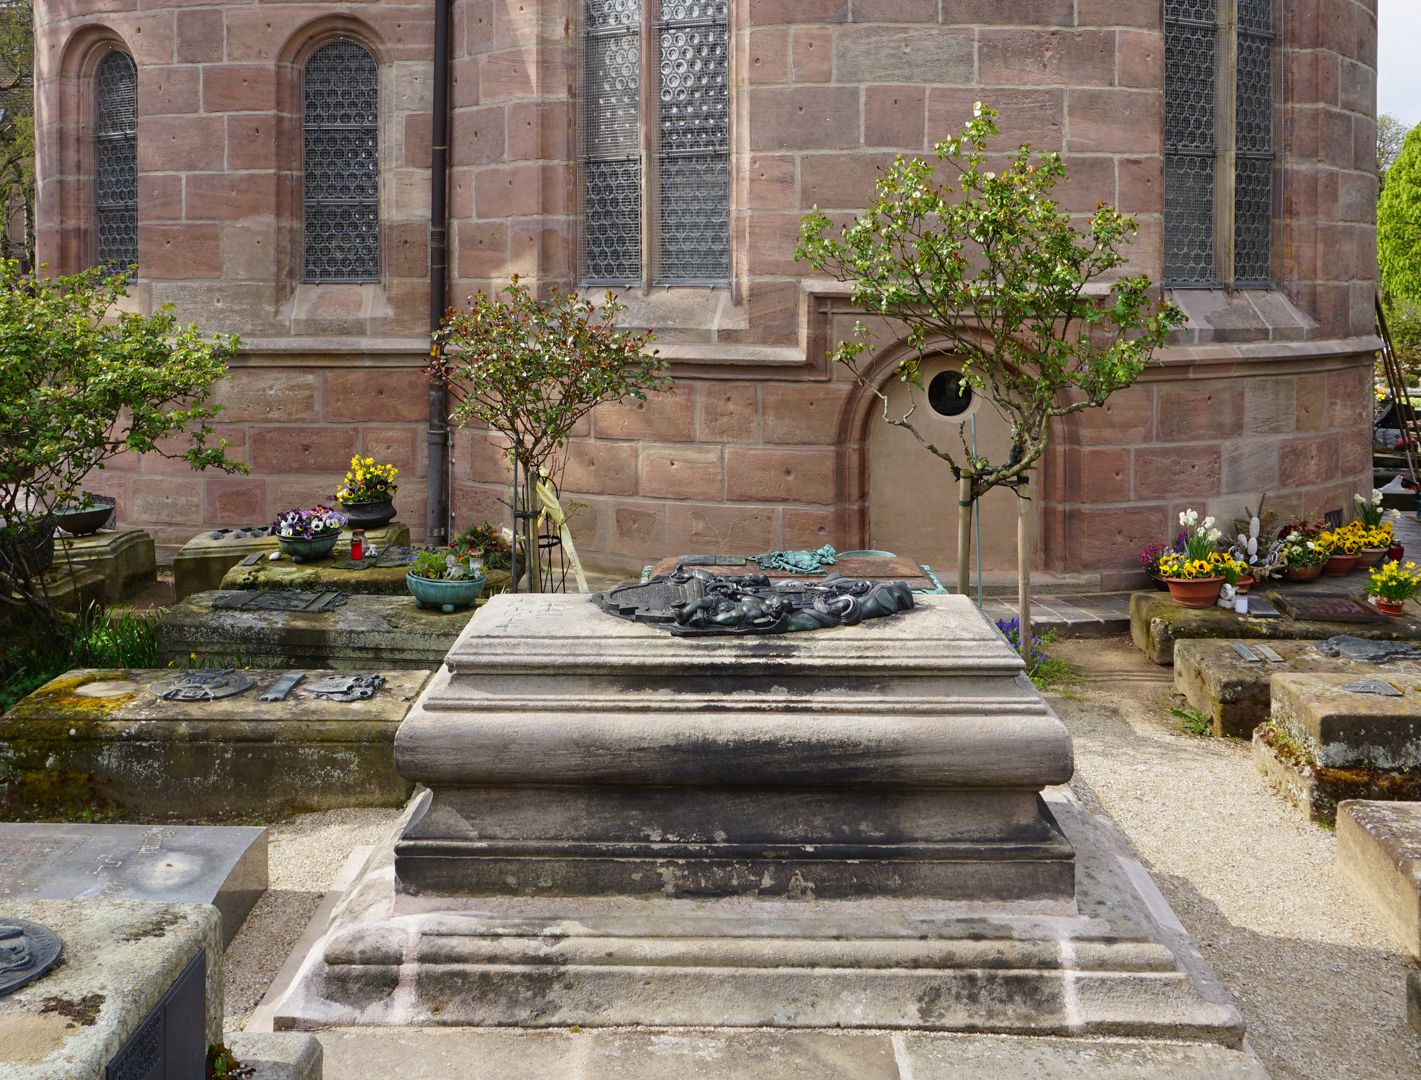 Gravesite of Carl Friedrich Behaim tombstone above the brick tomb